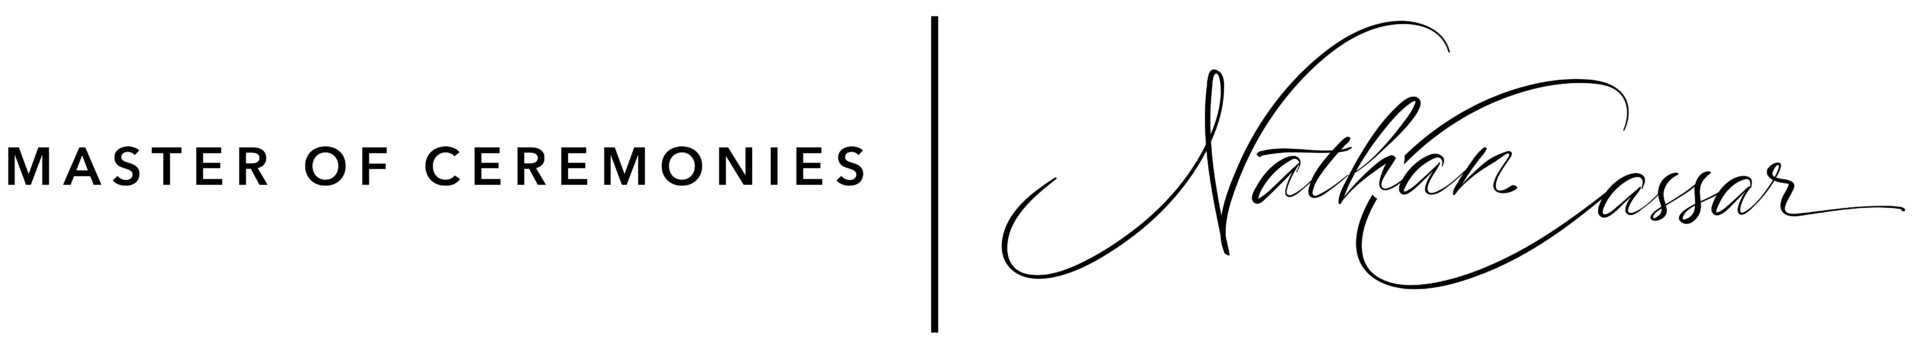 Nathan Cassar, MC Logo with tagline, vertical signature